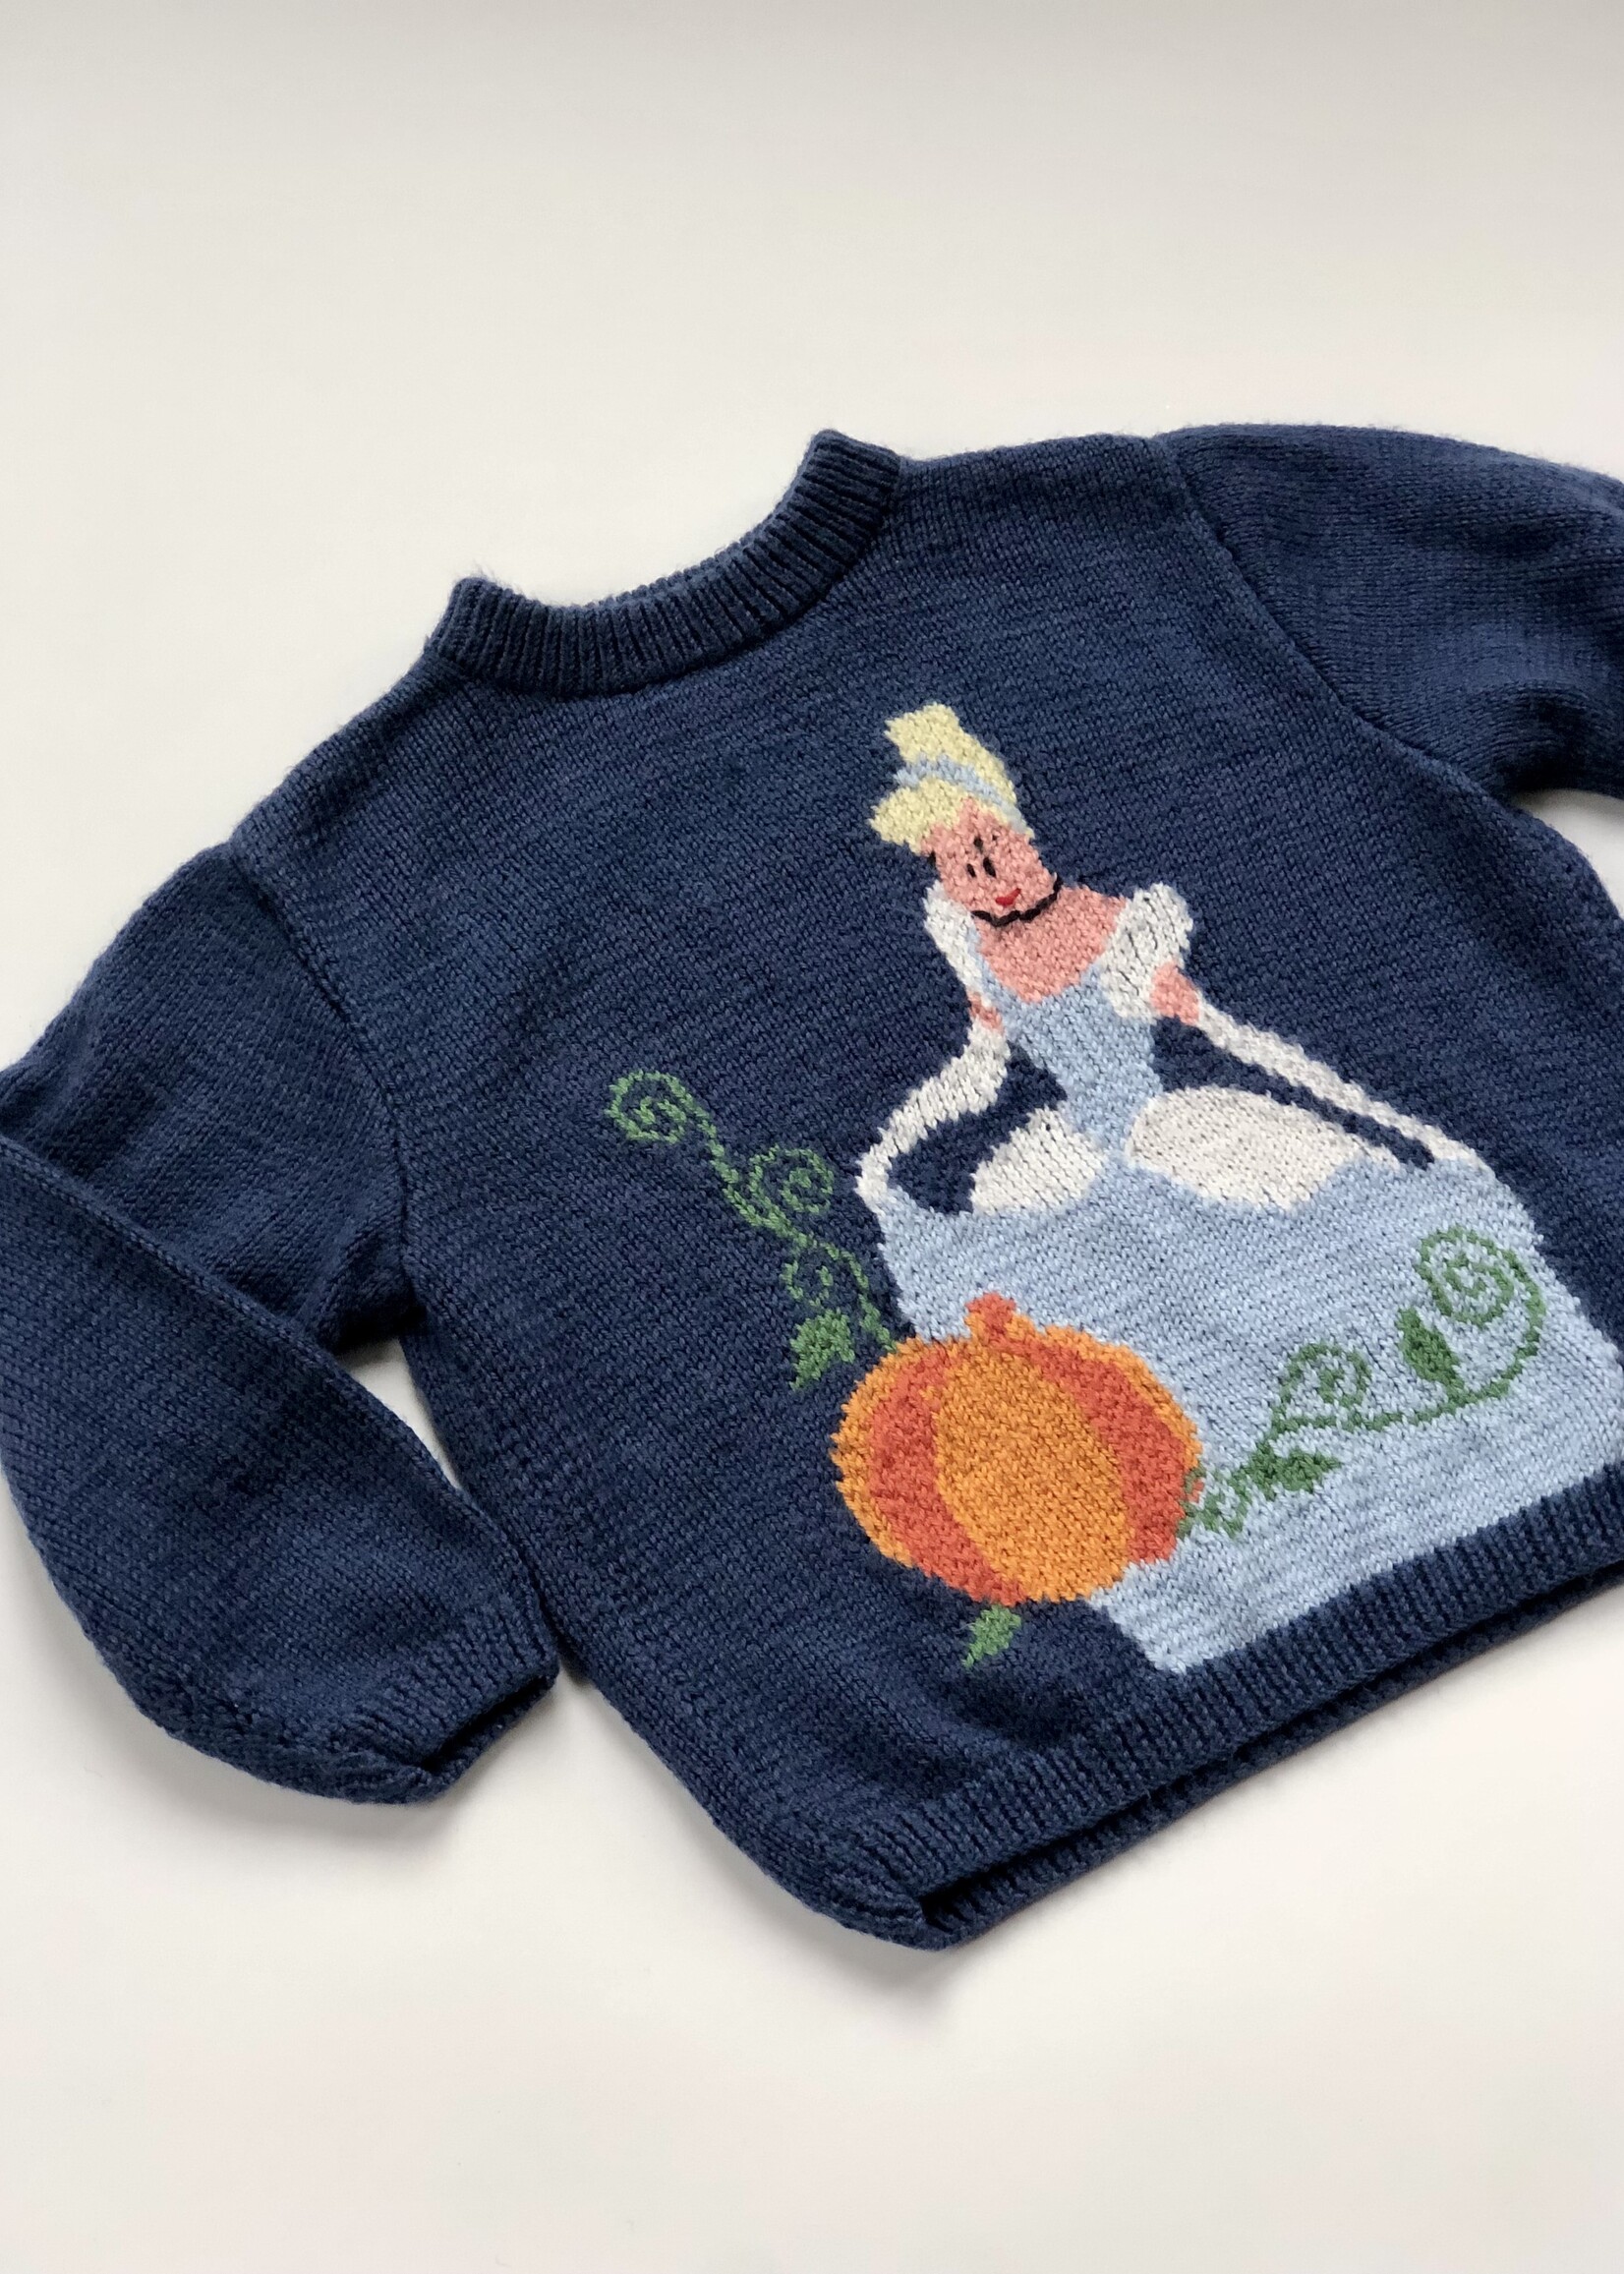 Handmade Cinderella knitted sweater 7y